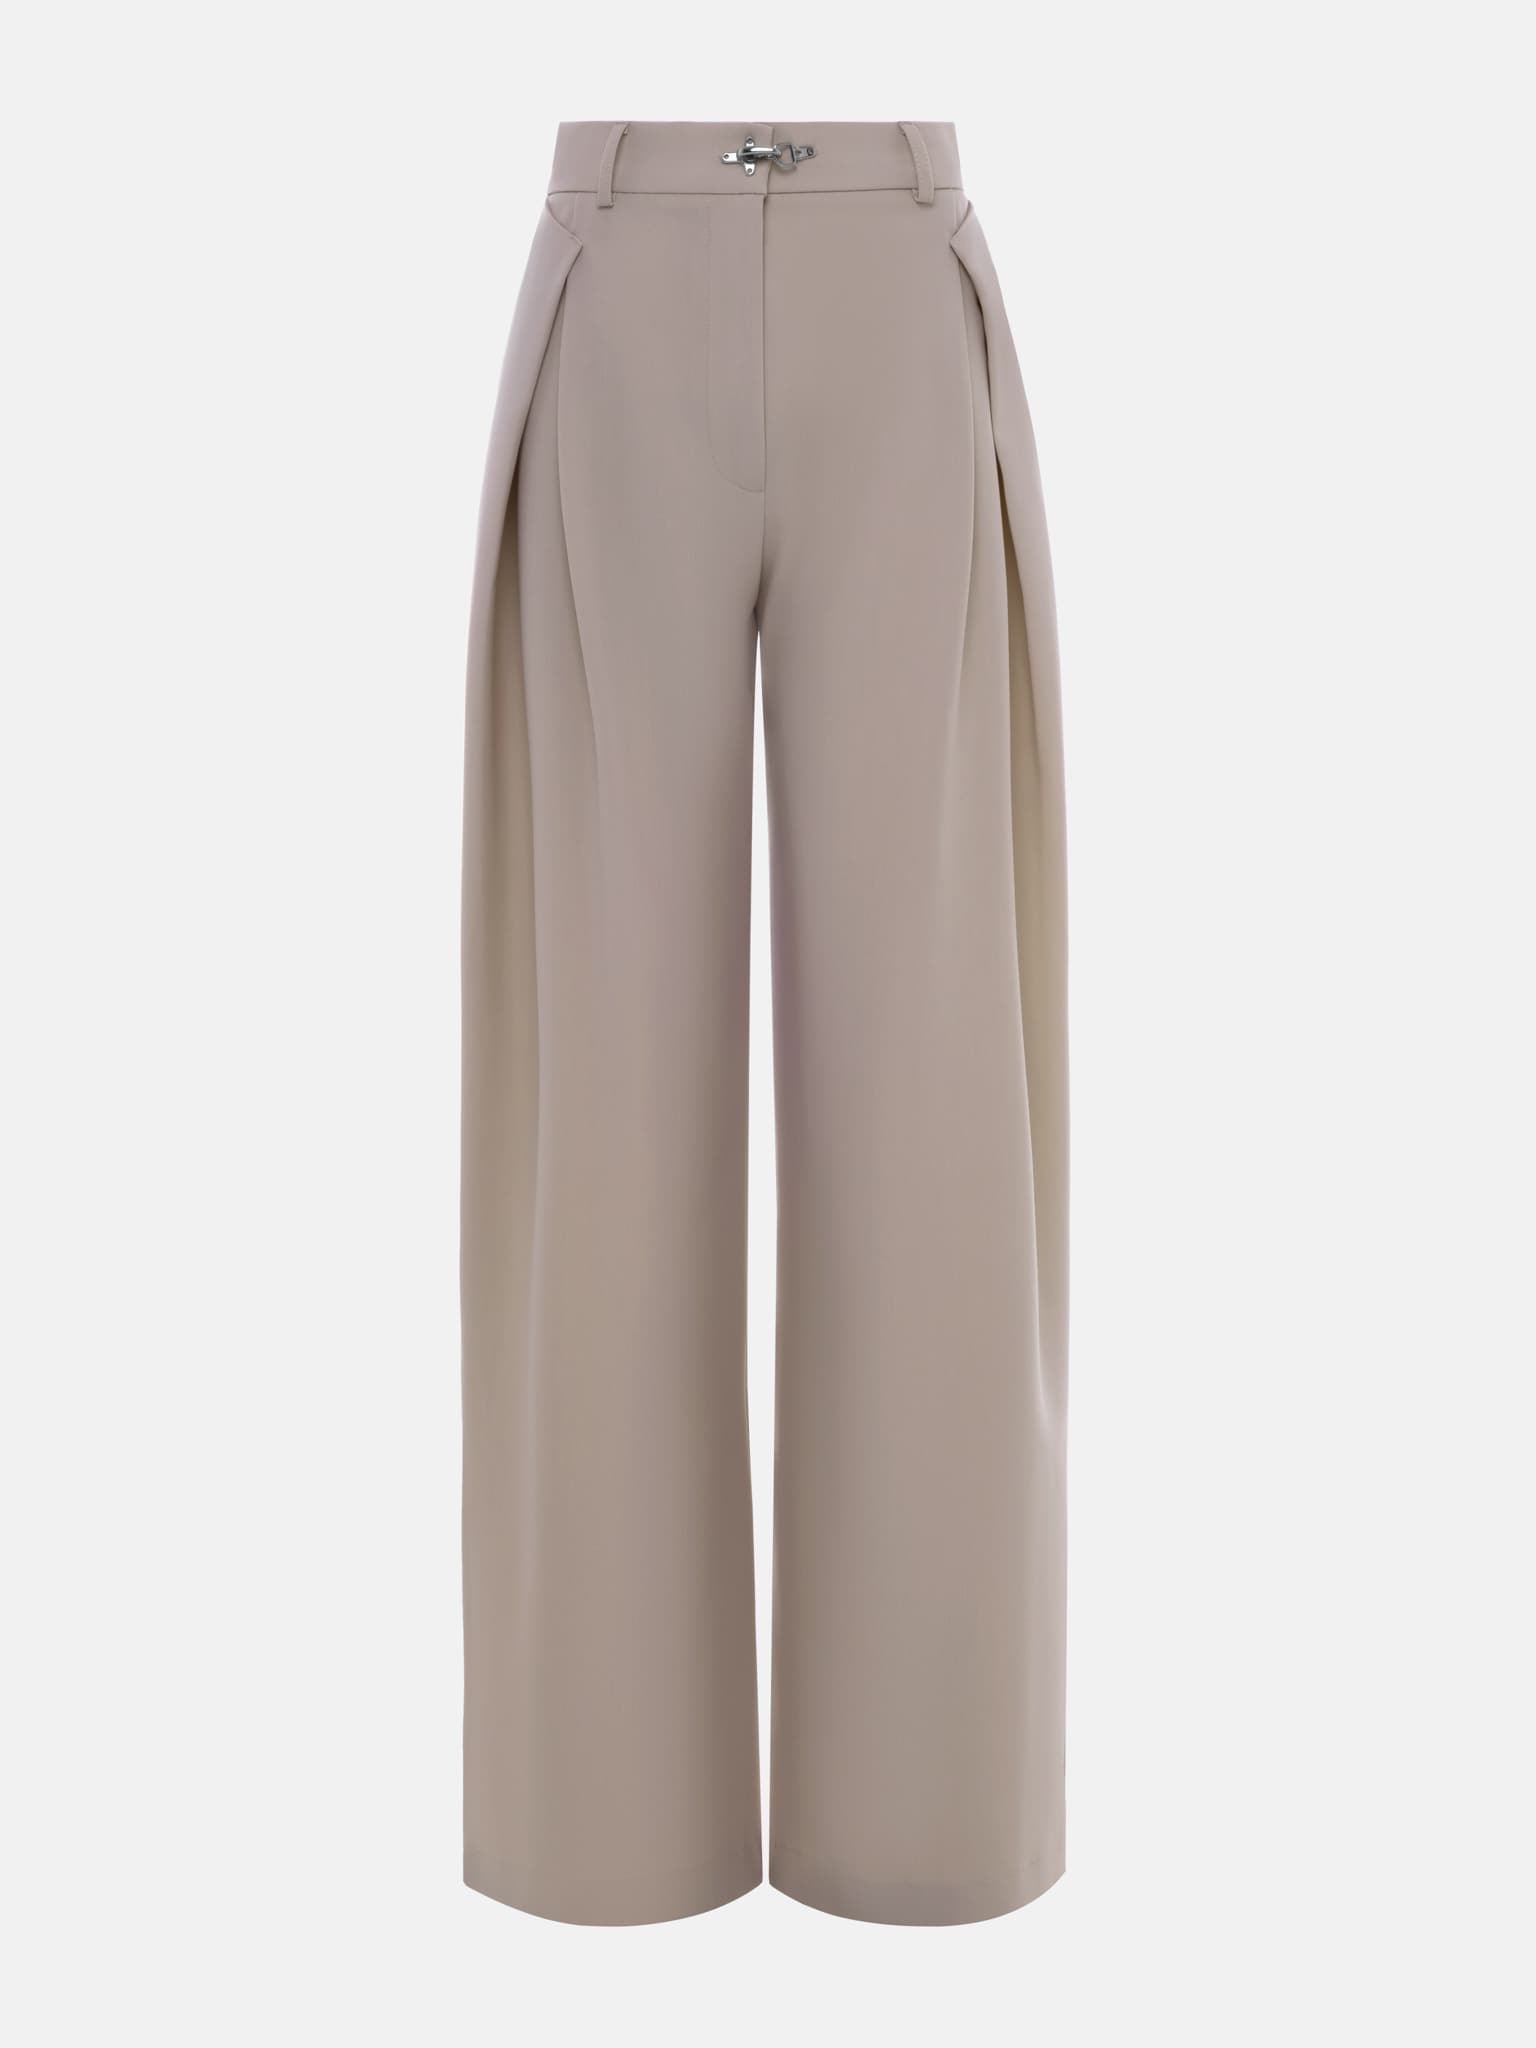 Buy Sage Green Trousers  Pants for Women by First Resort  Ramola Bachchan  Online  Ajiocom